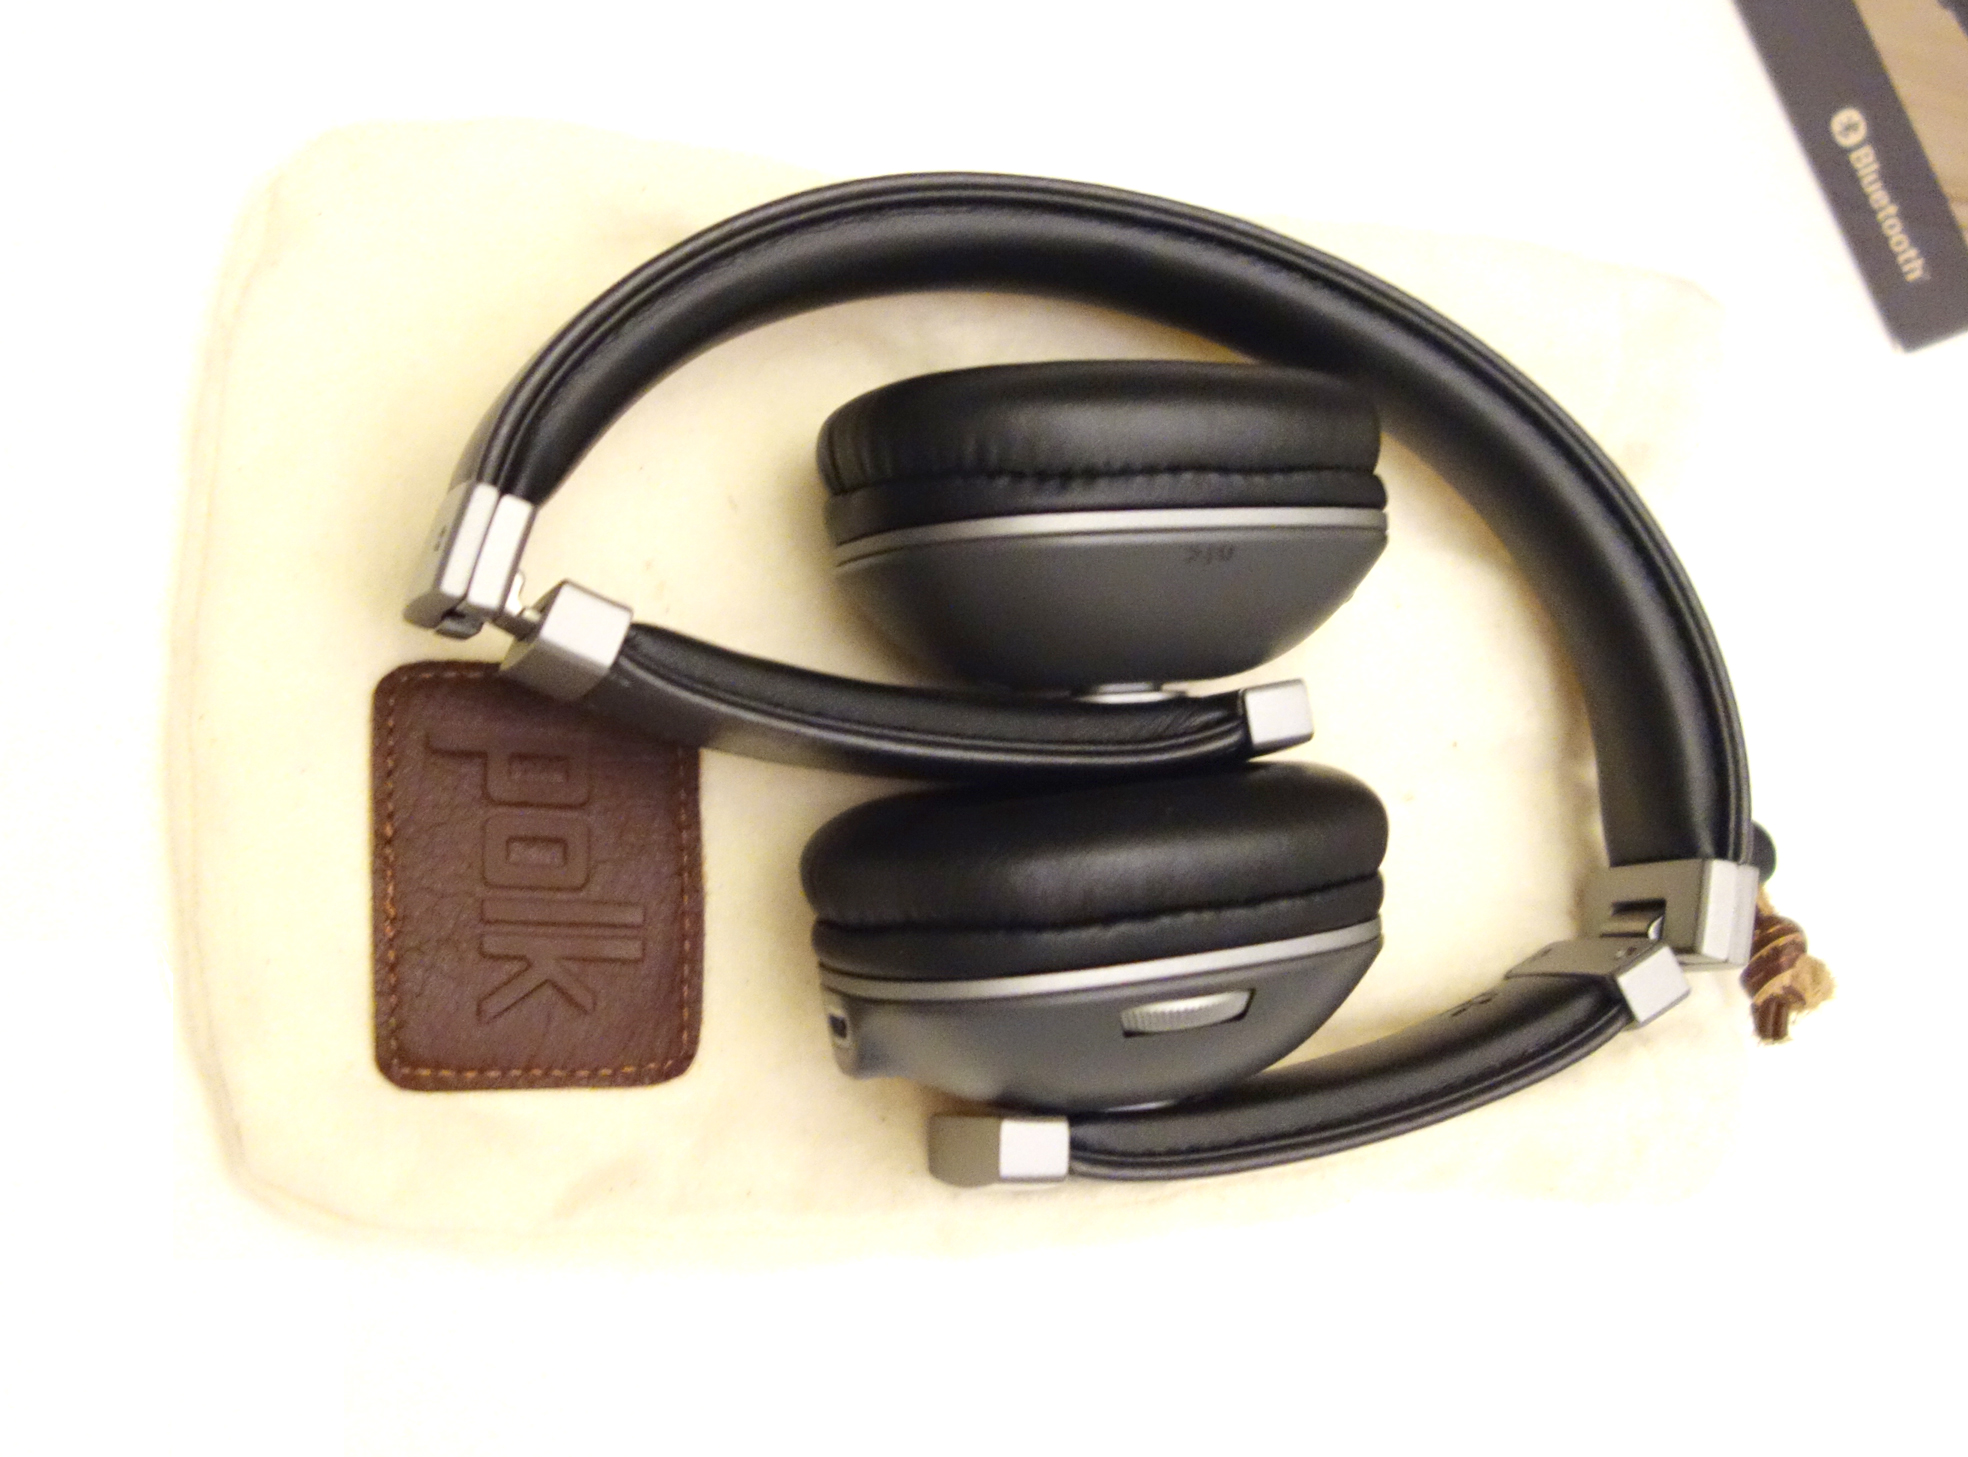 Polk Hinge Wireless Black Headset Review Folded